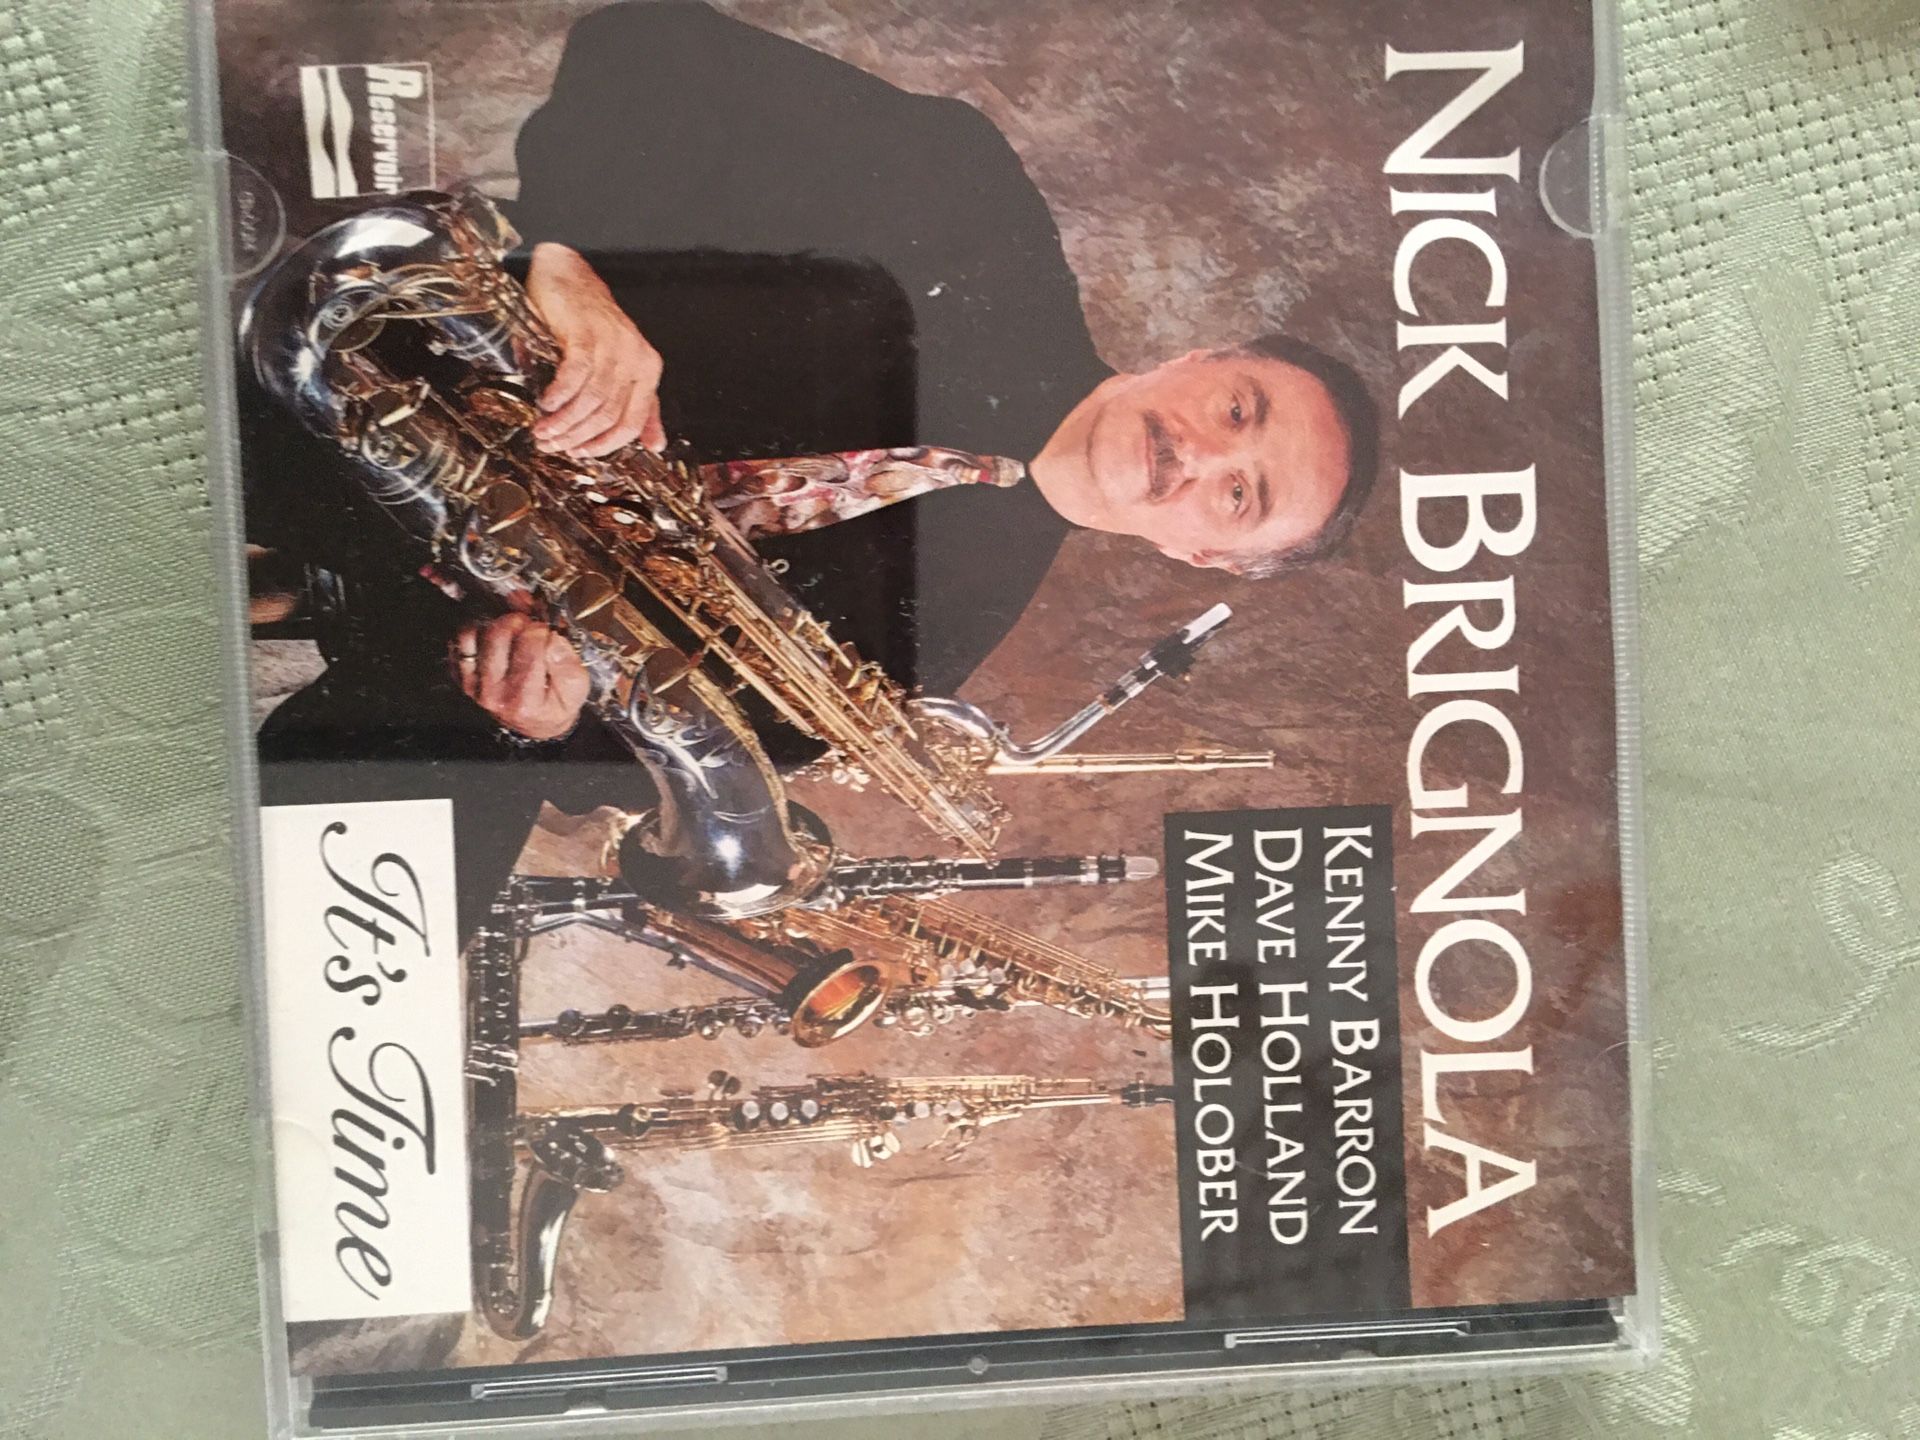 Nick Brignola CD. It’s Time